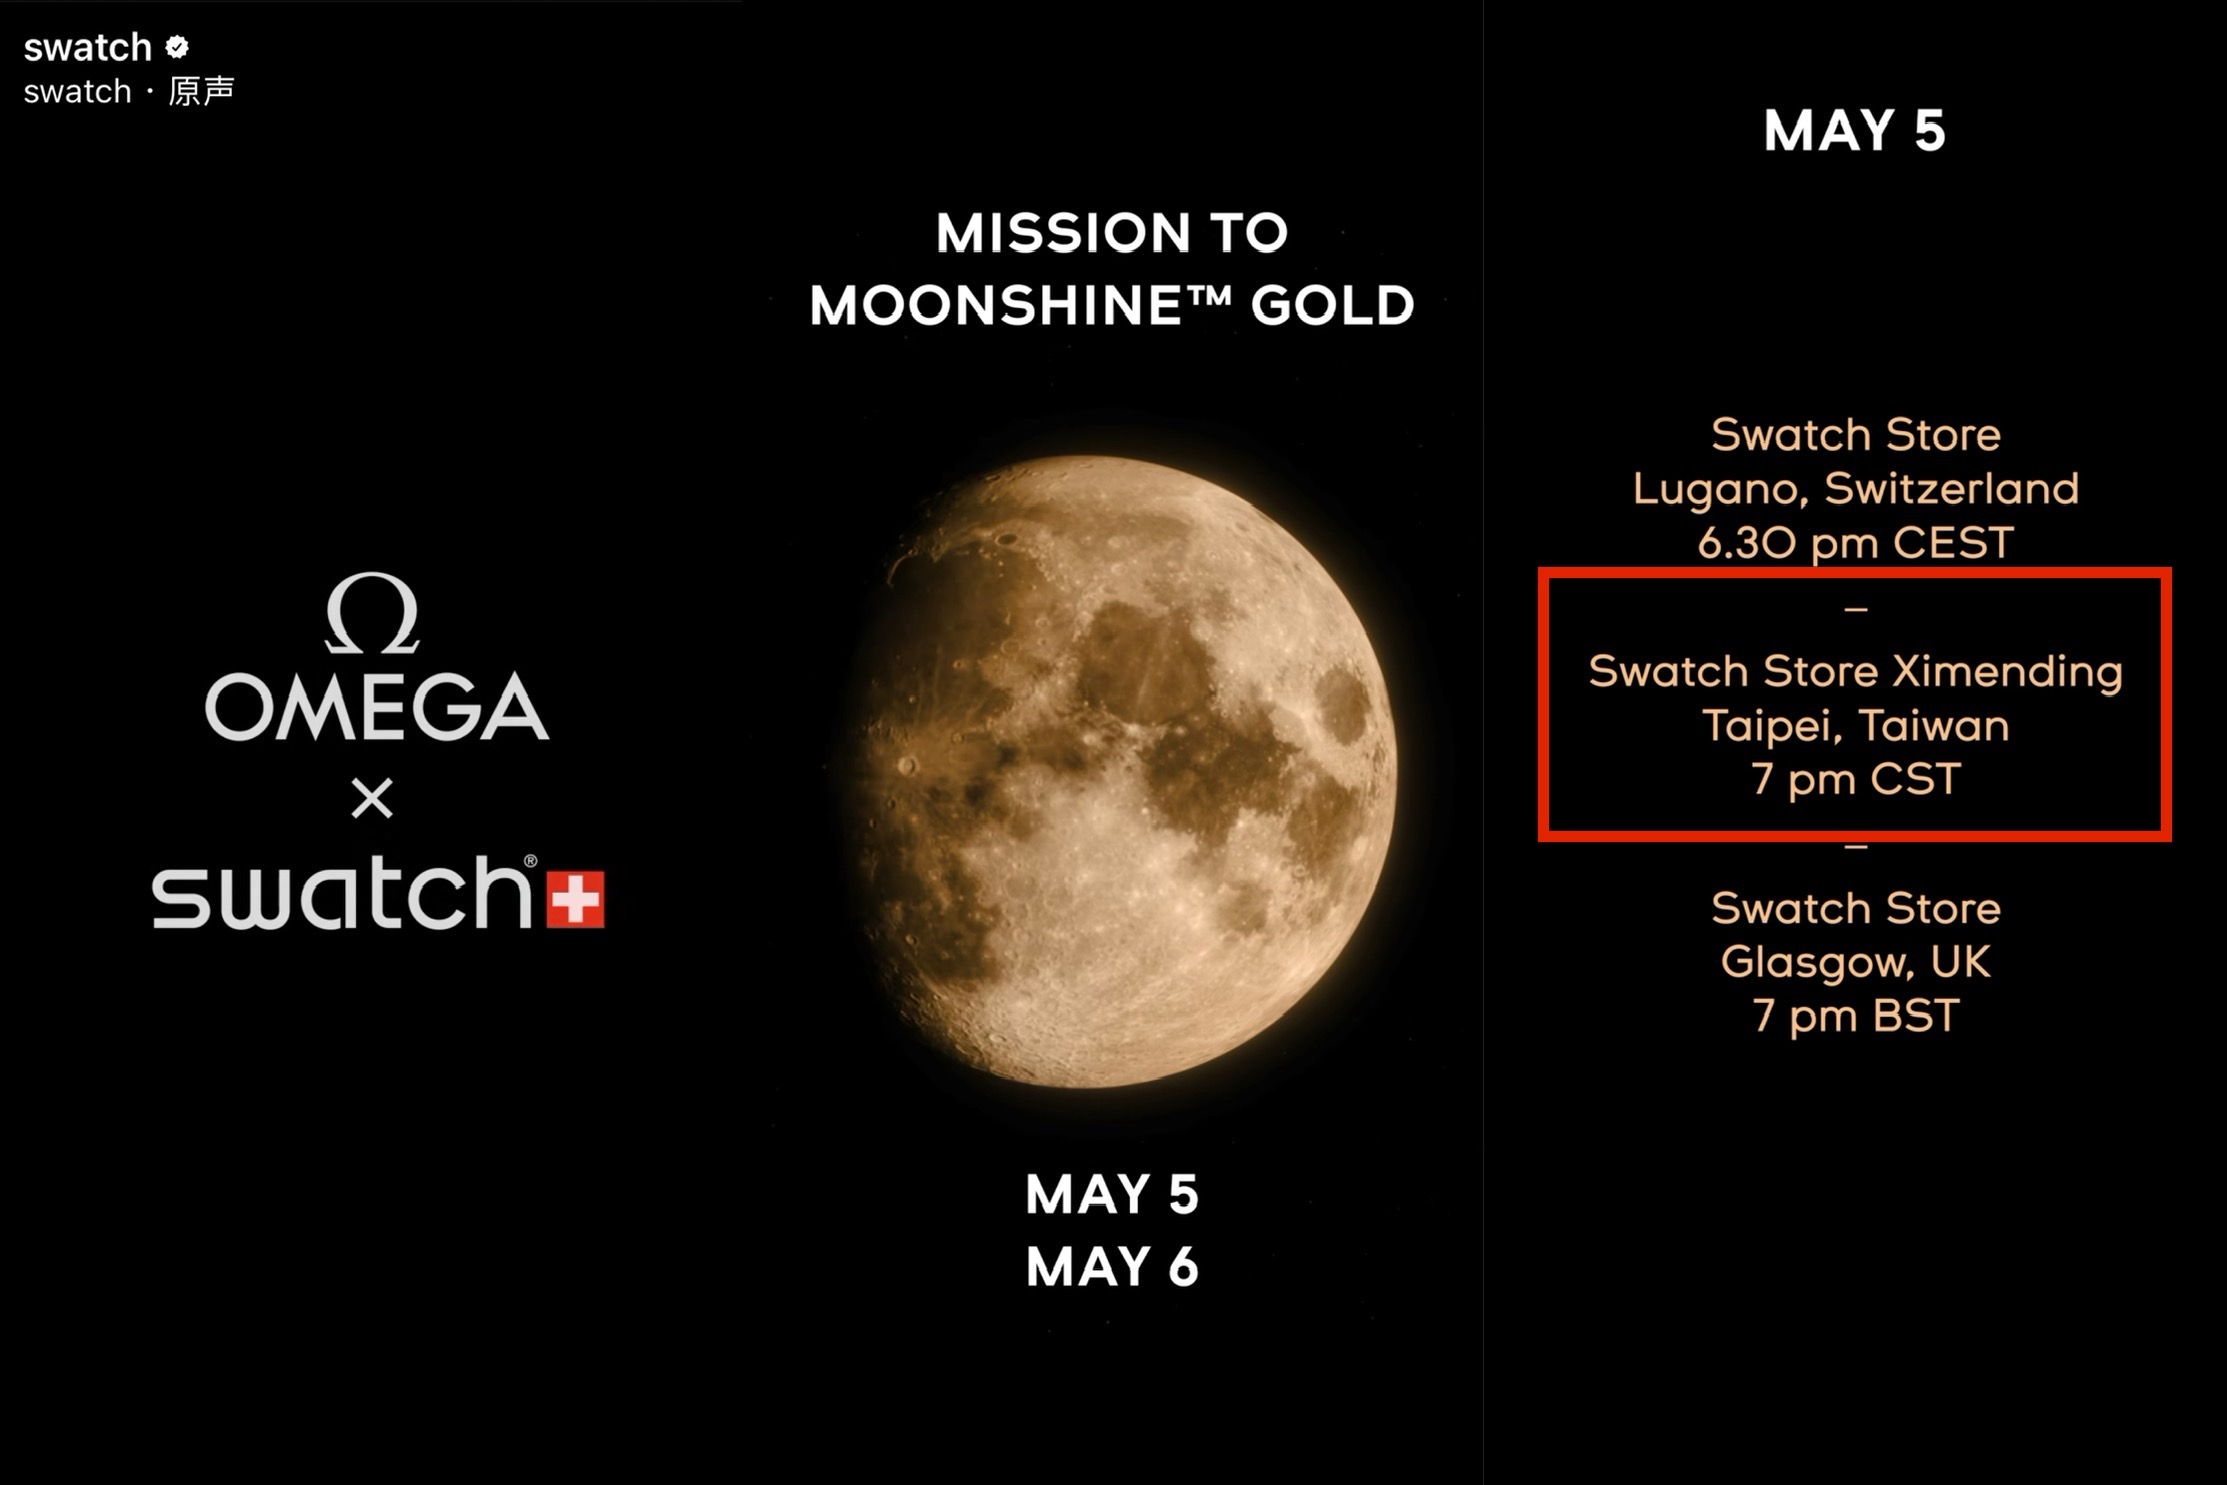 Swatch官方在5月4日凌晨公佈了最新的上架訊息，其中也包含了台灣，並預計於5月5日晚間7點於品牌的「西門形象店」販售